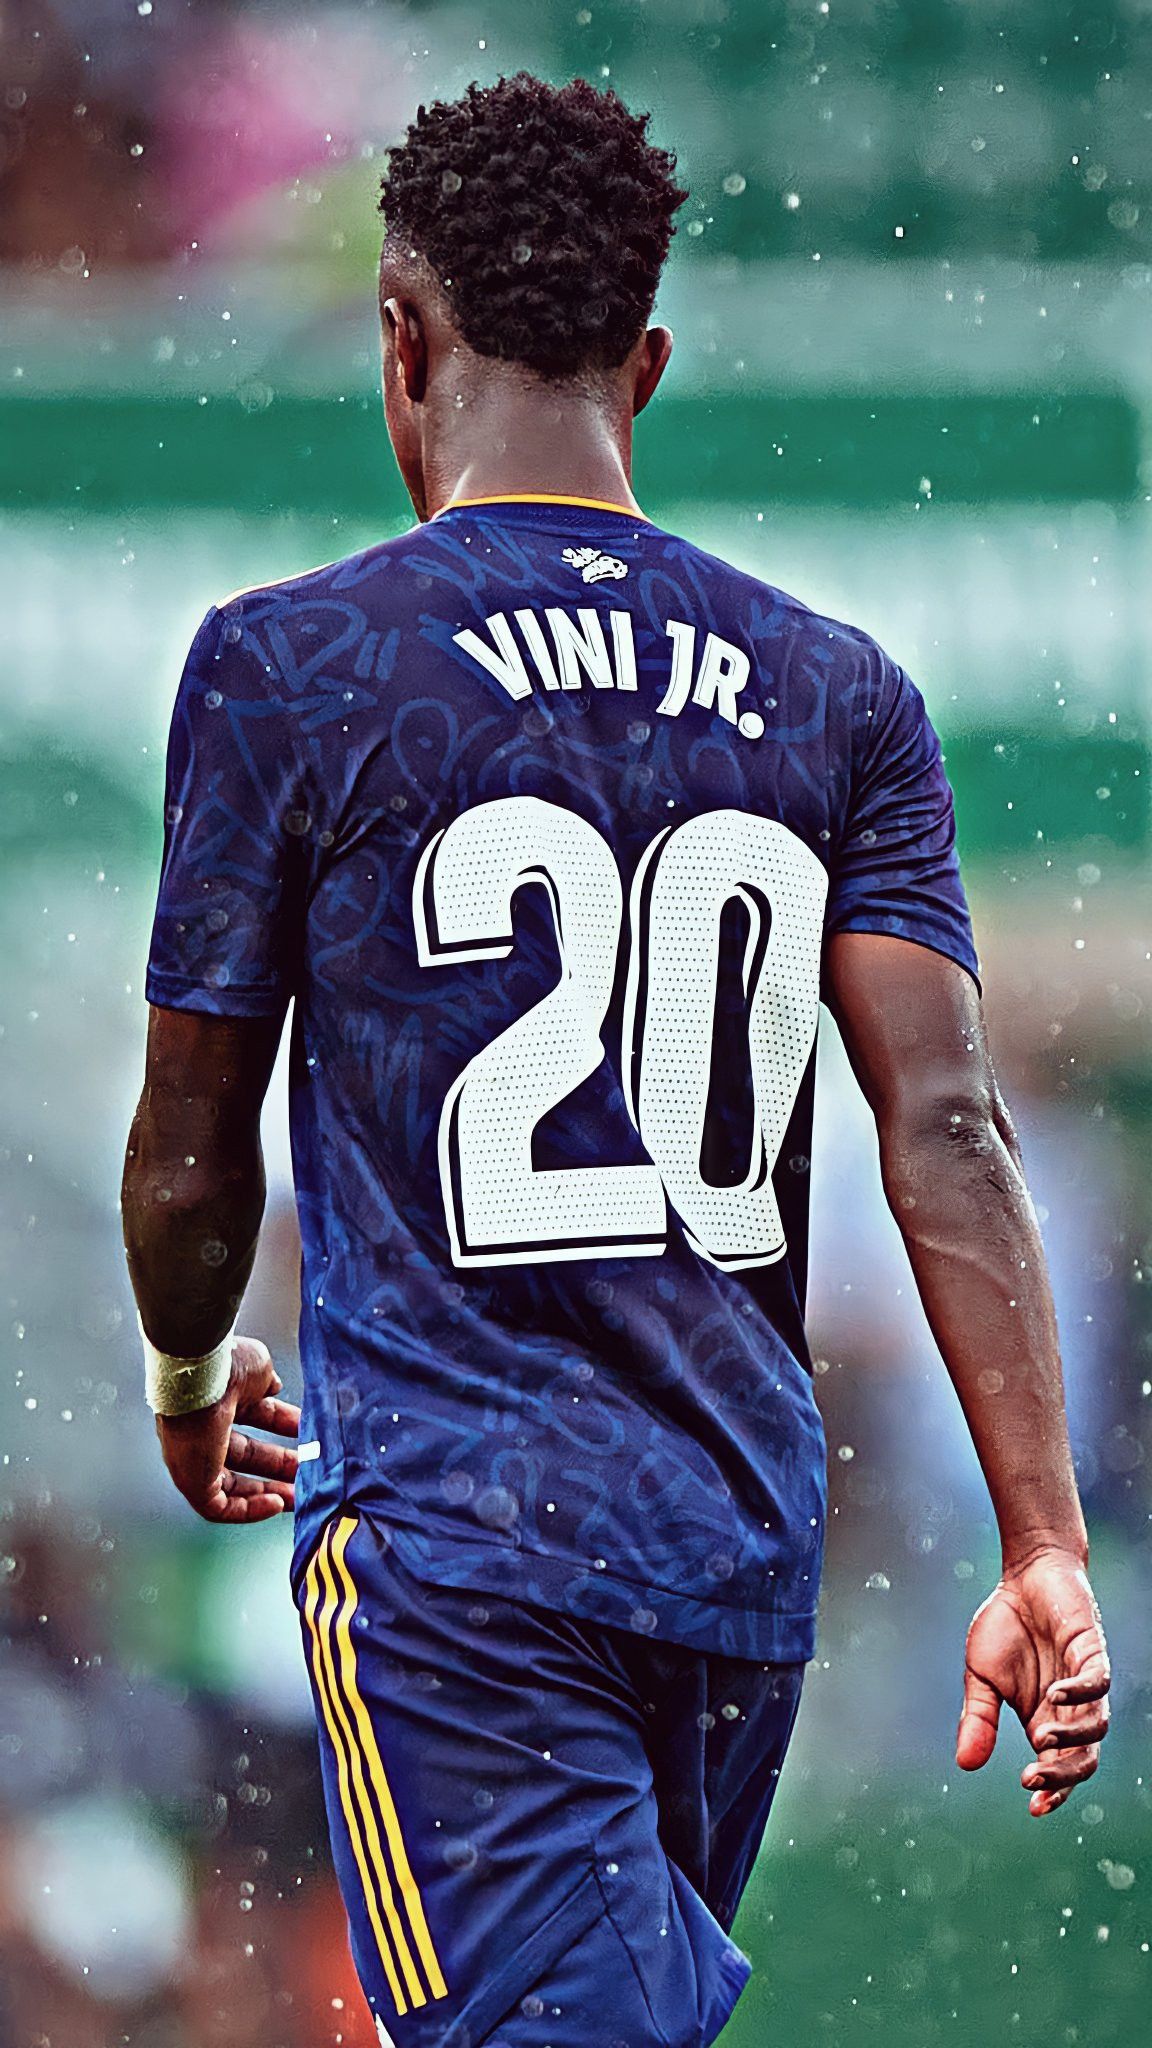 عکس شماره 20 وینیسیوس جونیور در رئال مادرید